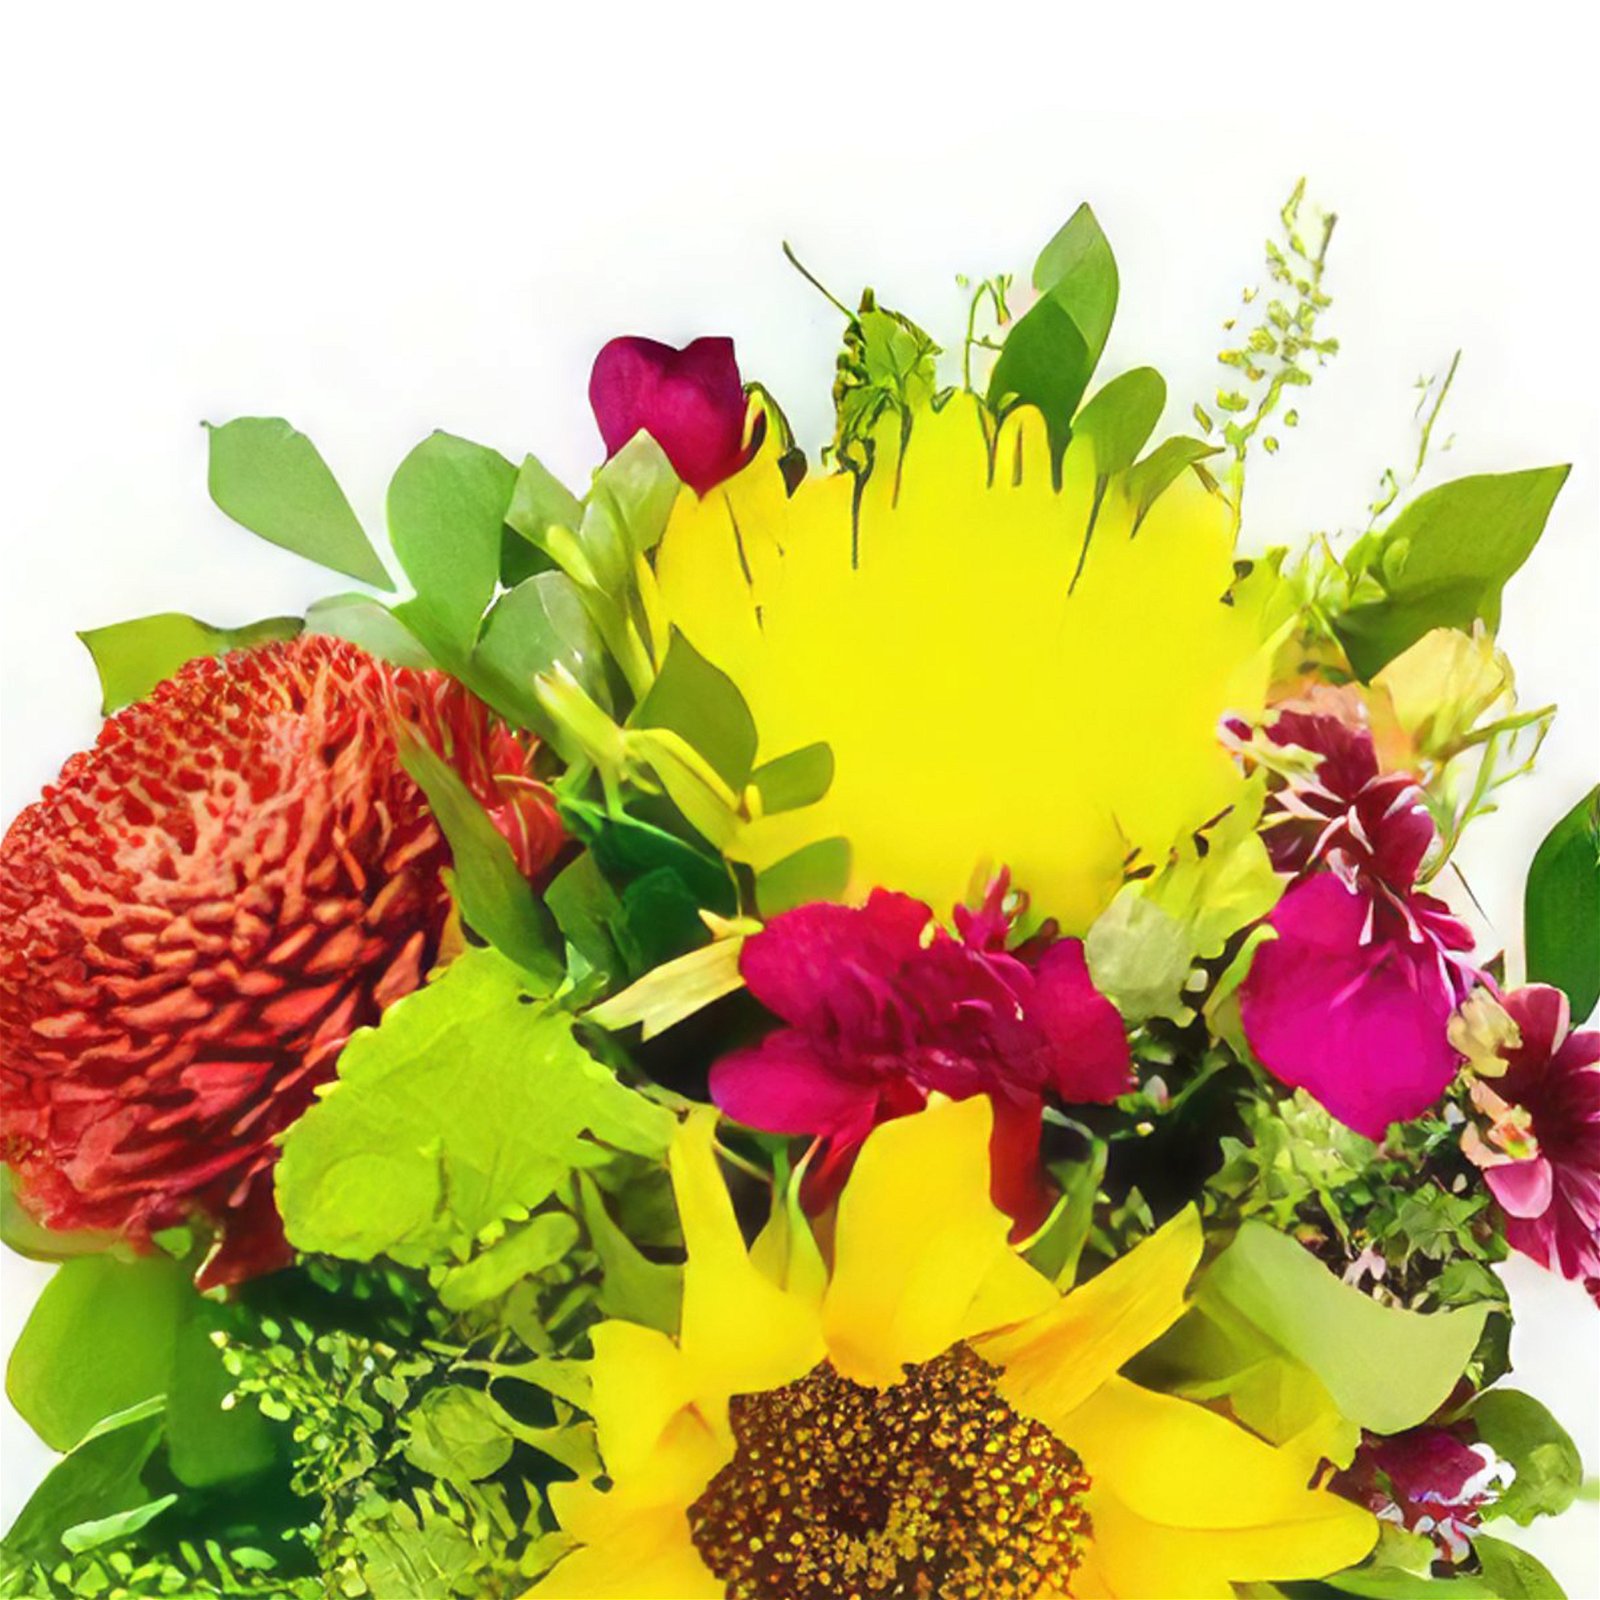 flores de Las Biajacas- Amor de Primavera Bouquet/arranjo de flor